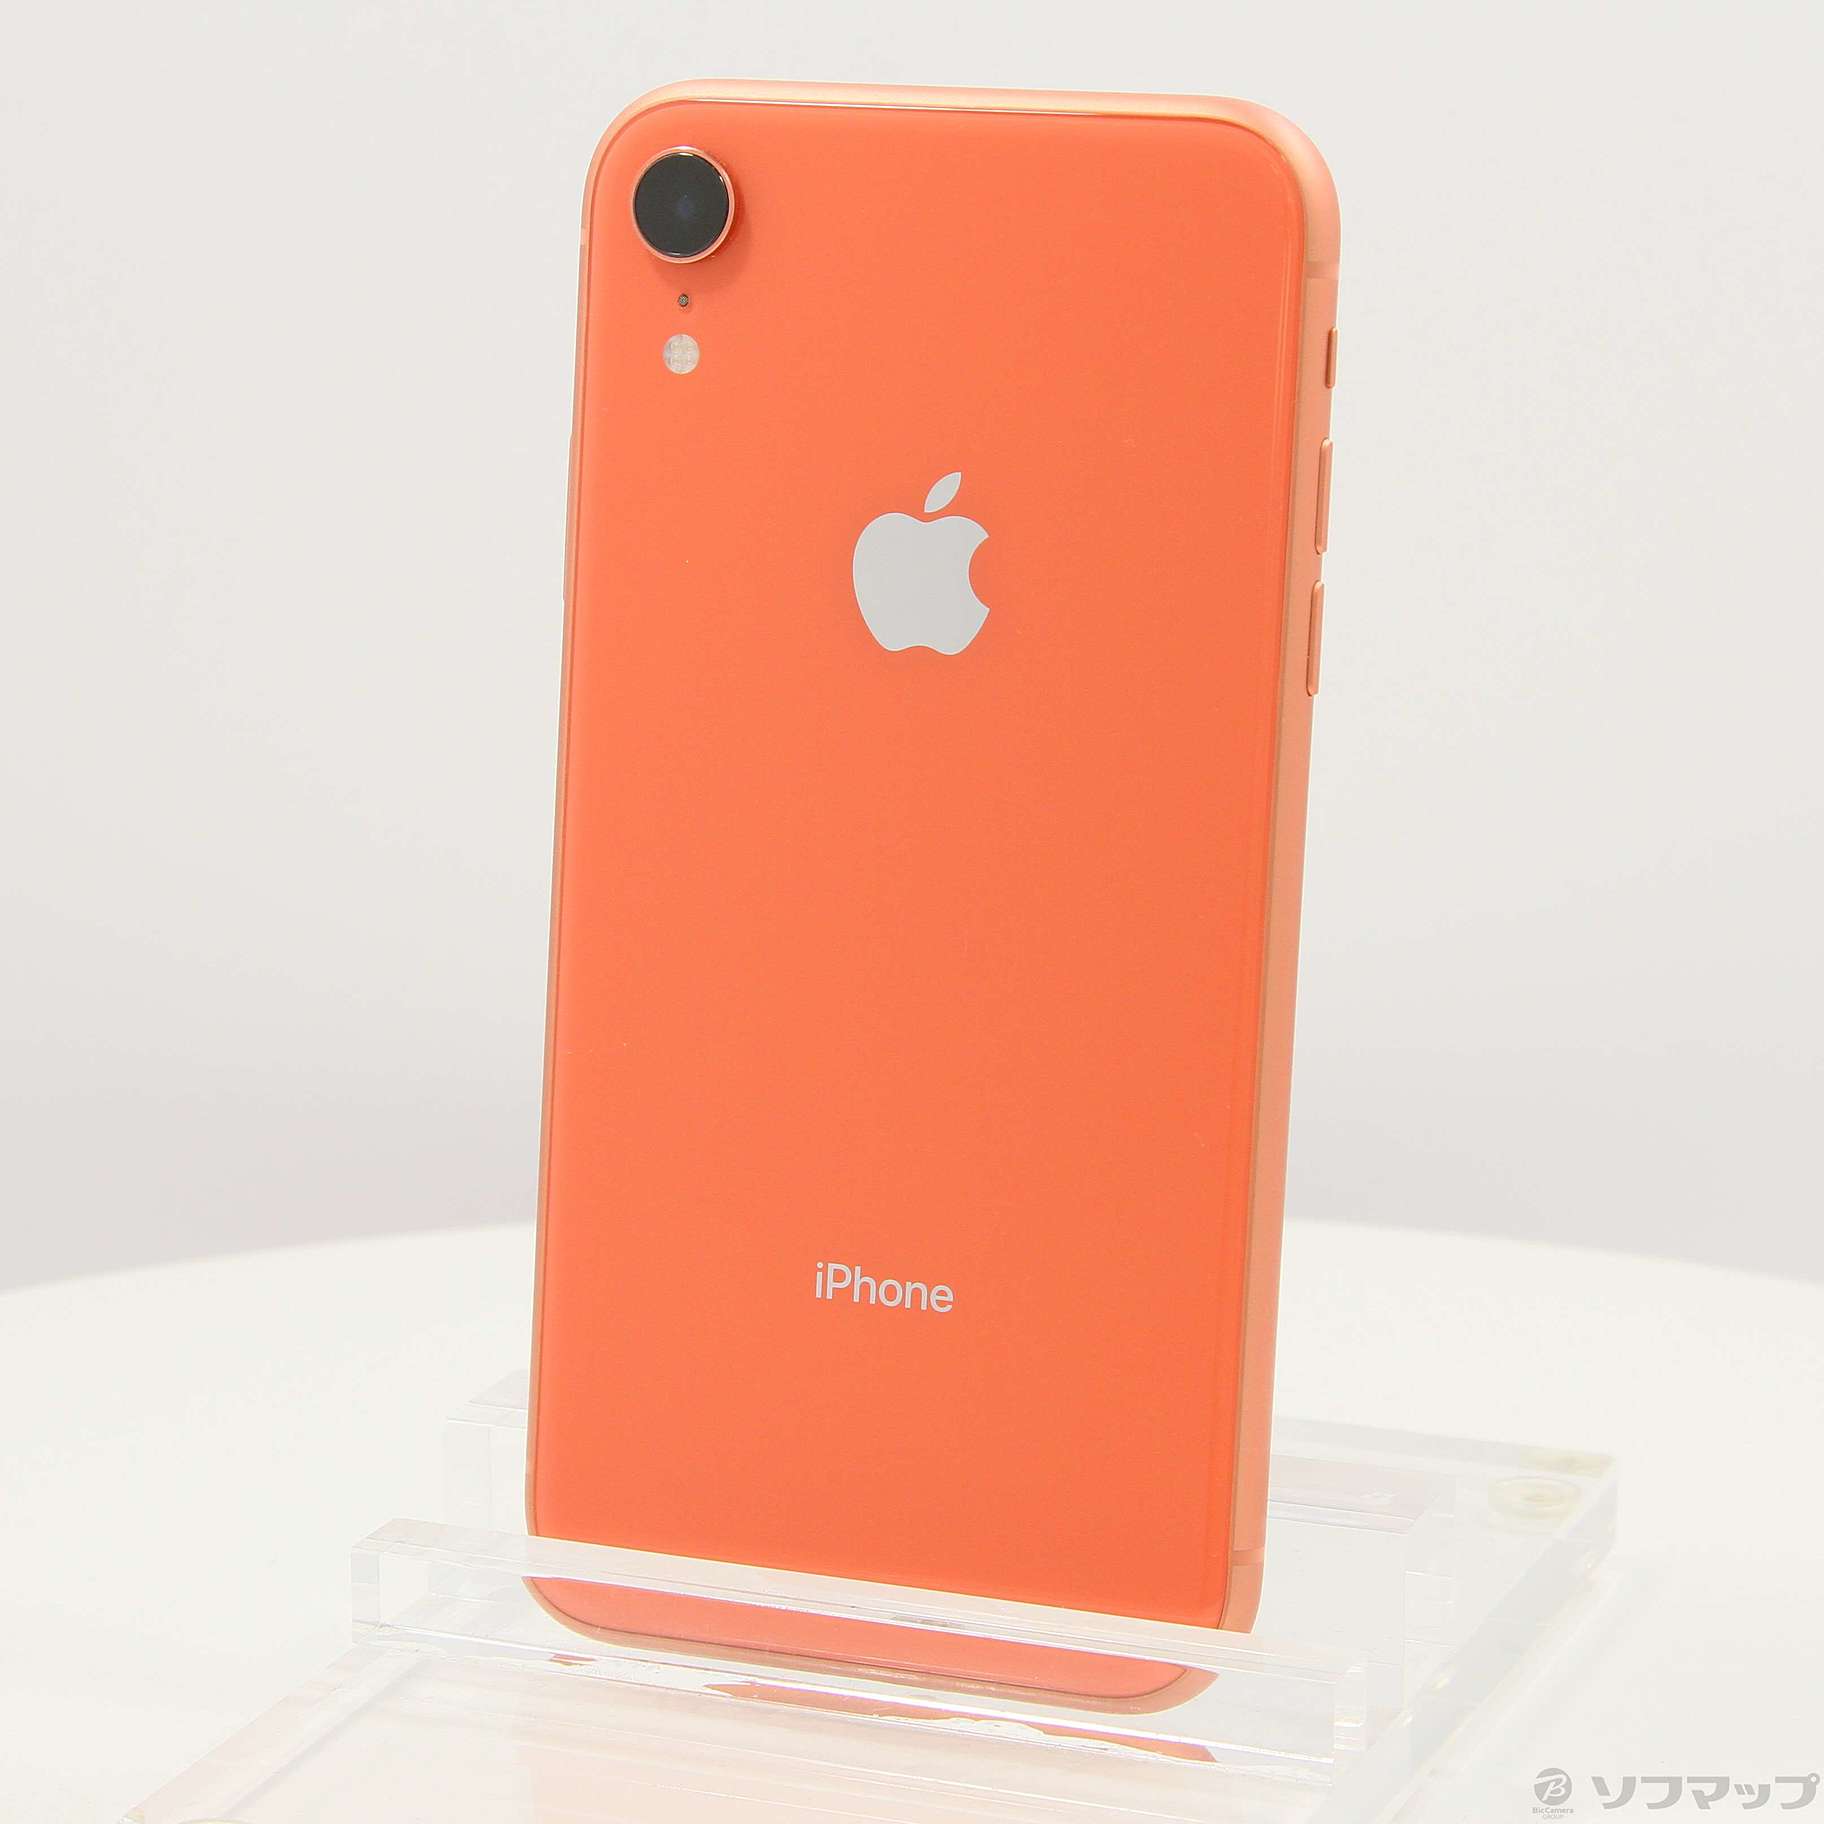 iPhone XR Coral 128 GB Softbank